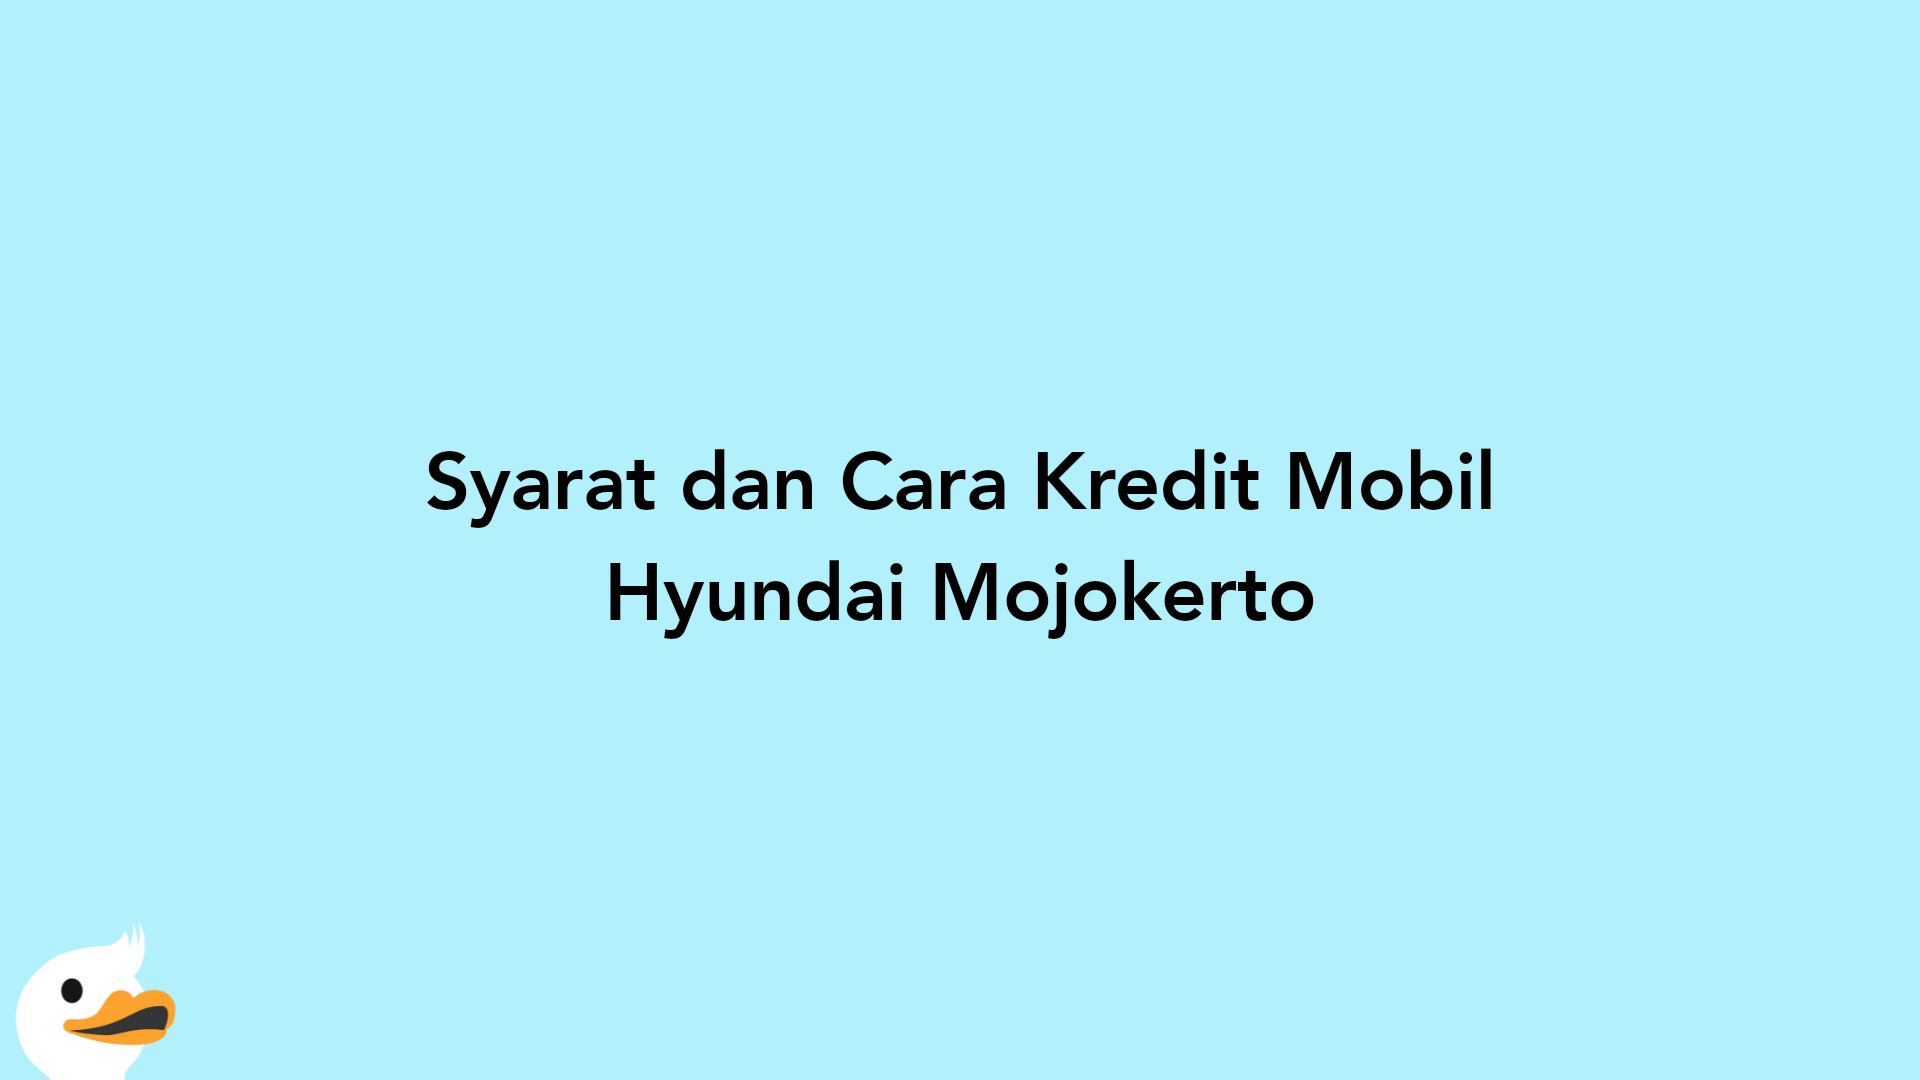 Syarat dan Cara Kredit Mobil Hyundai Mojokerto